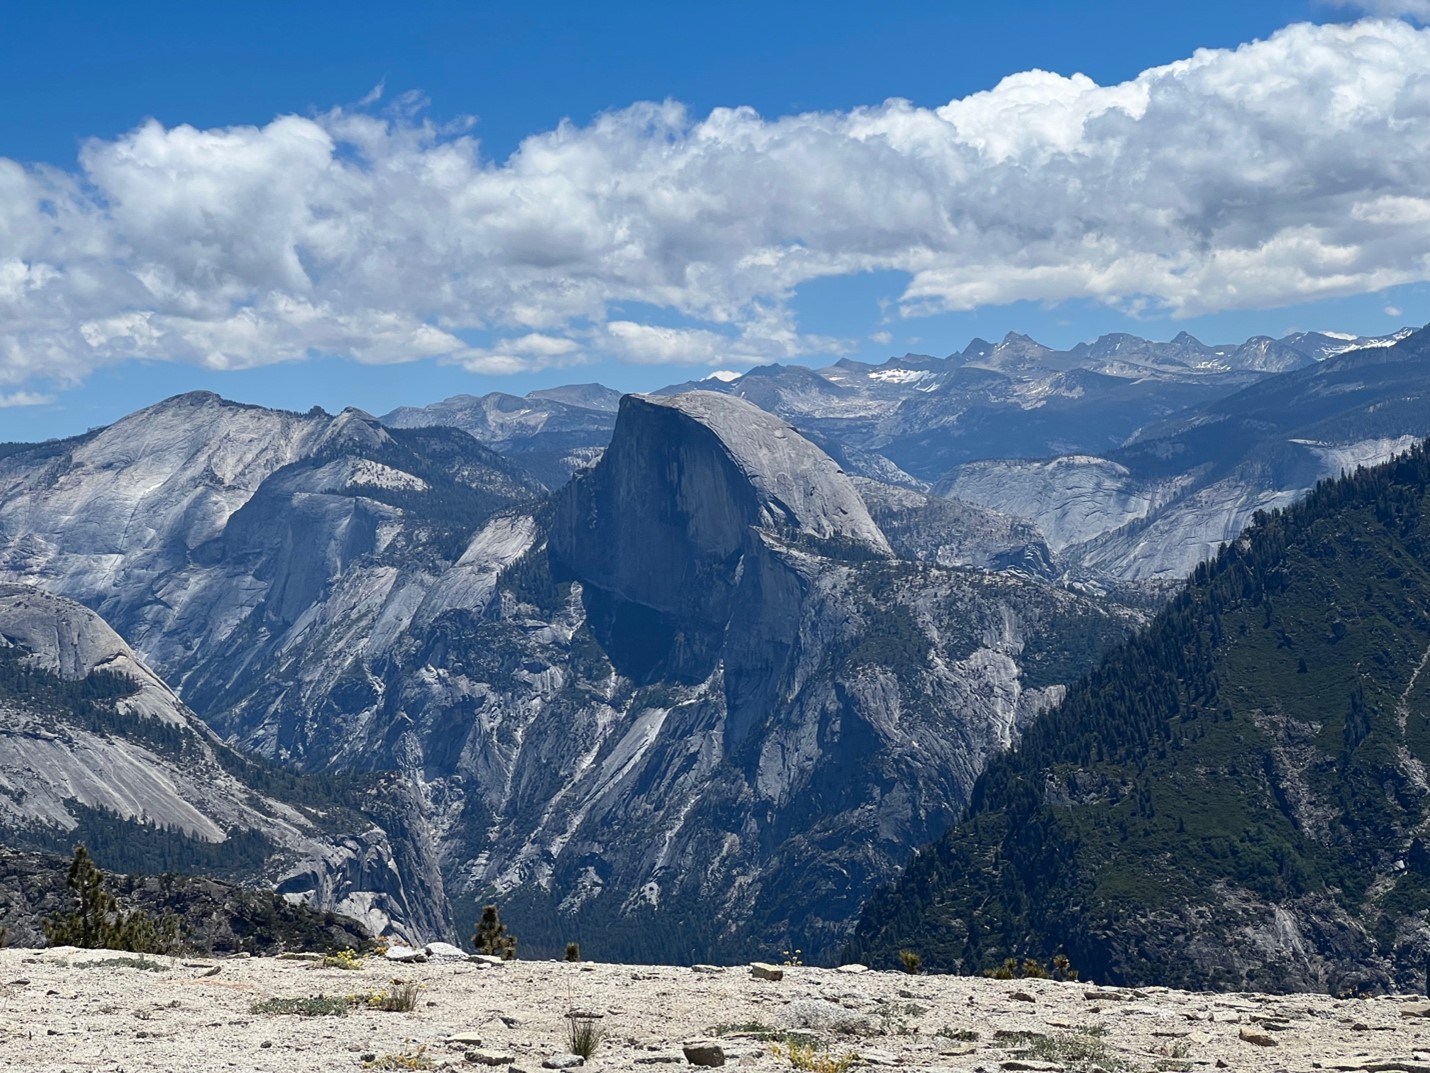 Landscape photo of Yosemite Valley